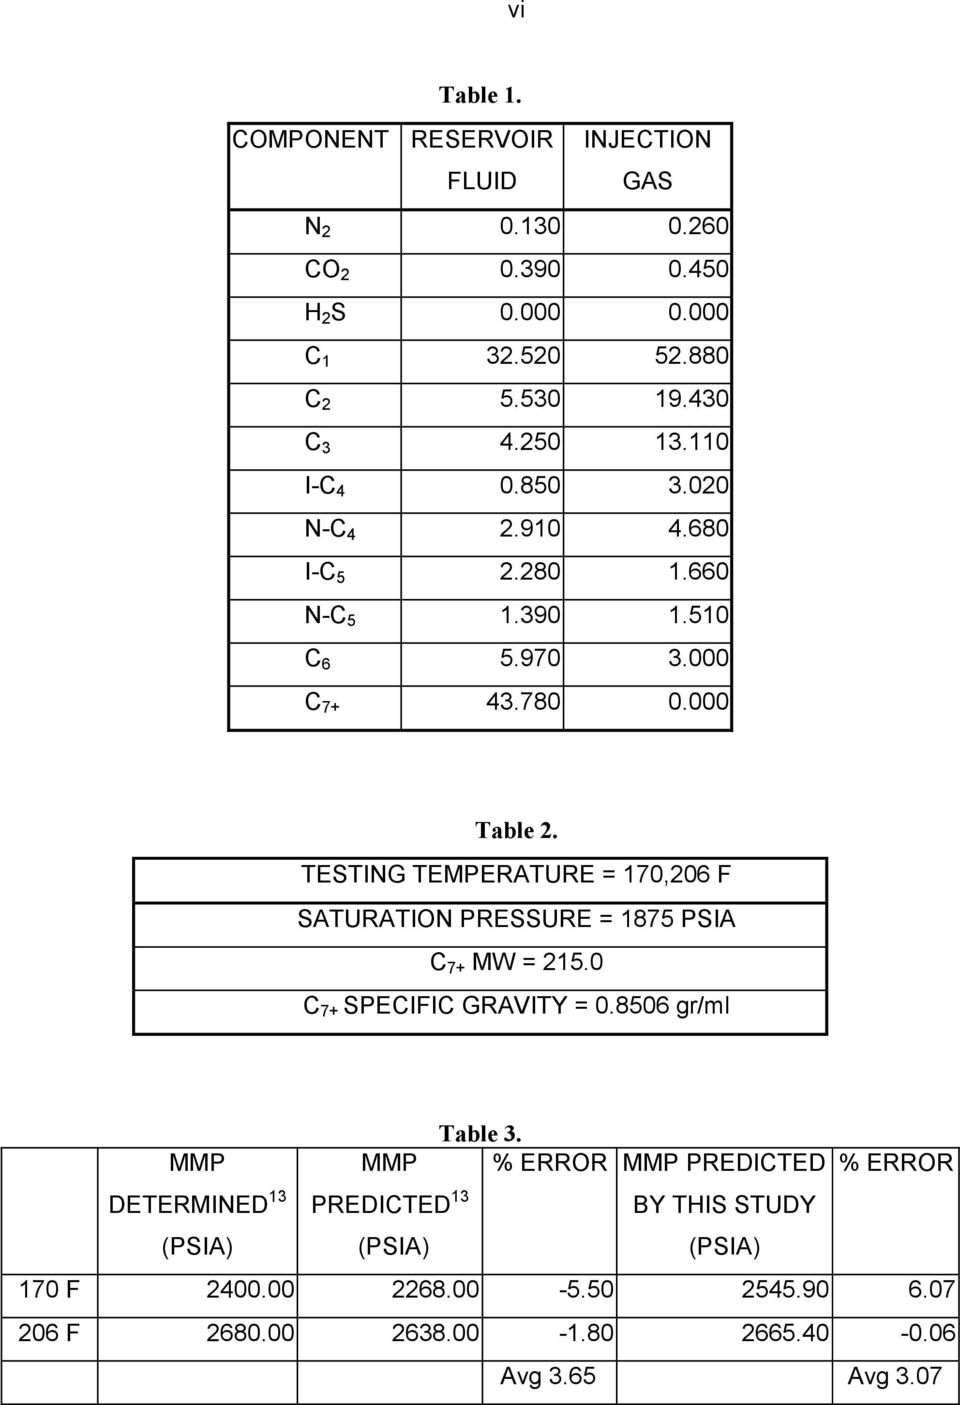 TESTING TEMPERATURE = 170,206 F SATURATION PRESSURE = 1875 PSIA C 7+ MW = 215.0 C 7+ SPECIFIC GRAVITY = 0.8506 gr/ml Table 3.